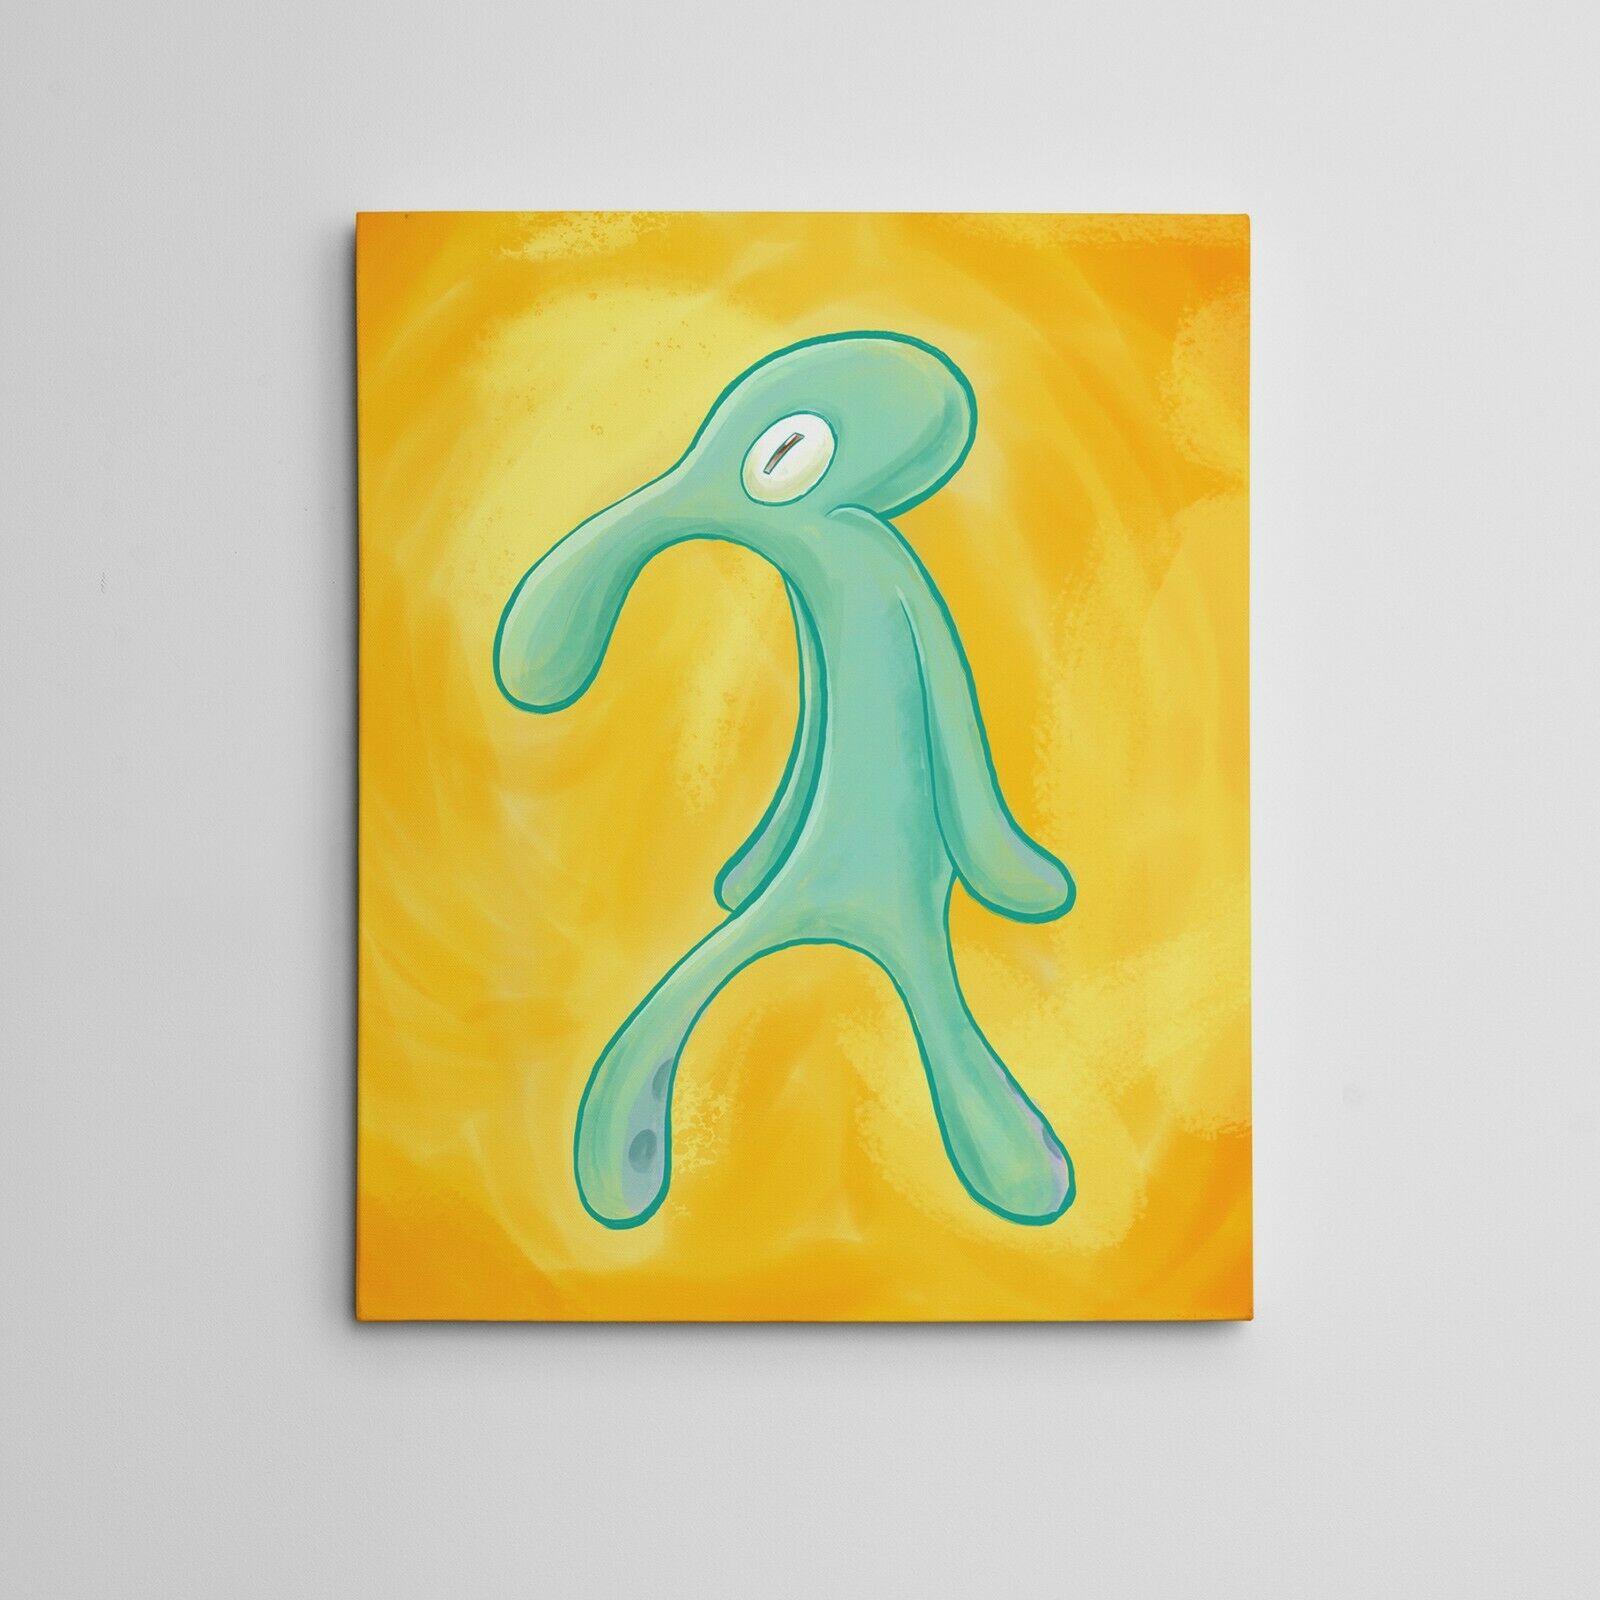 11x14" Gallery Art Canvas: Bold And Brash Framed Painting Squidward Spongebob